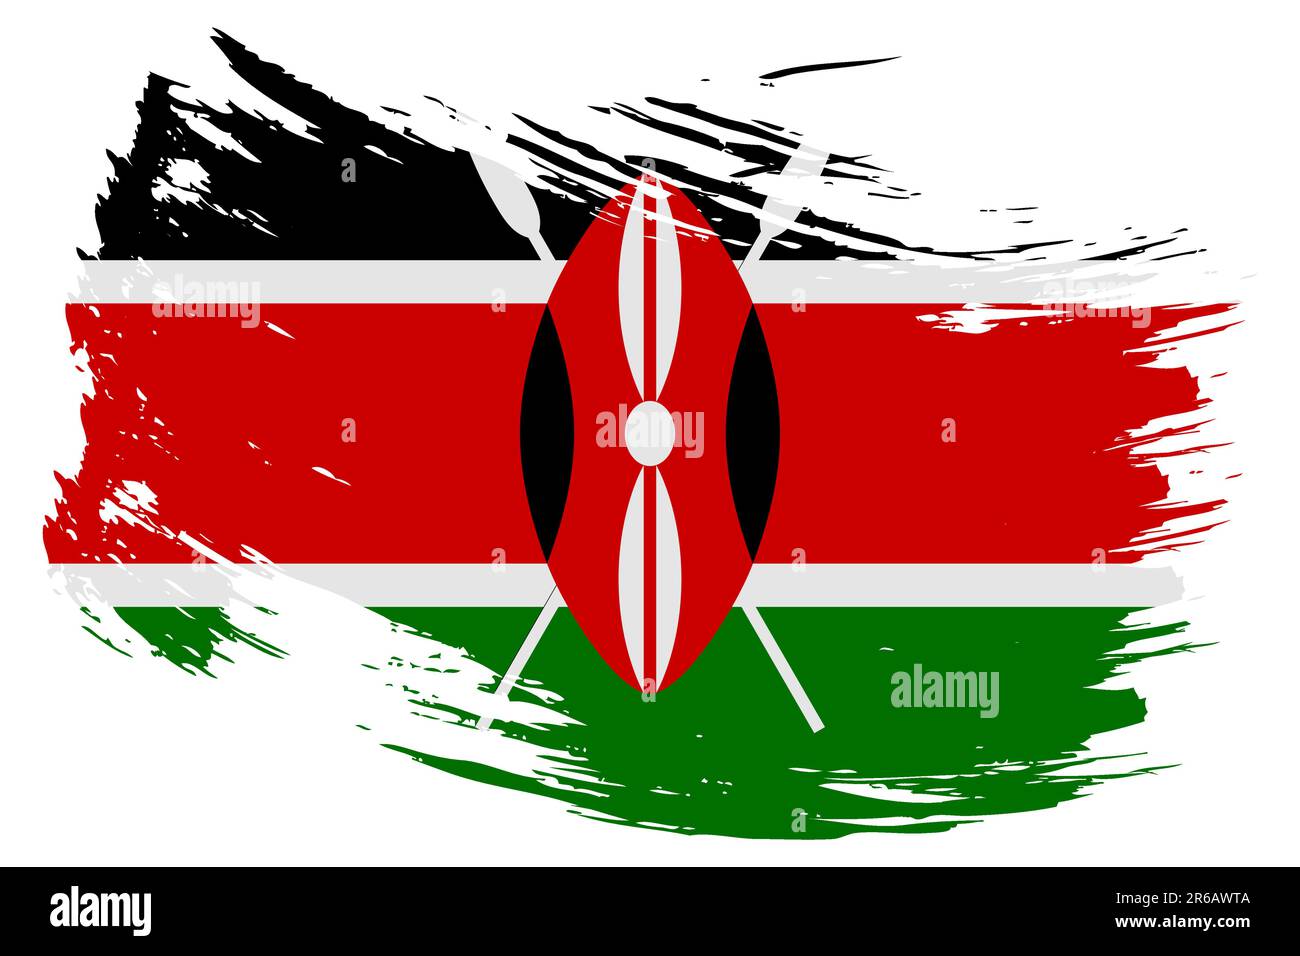 Kenya brush stroke flag vector background. Hand drawn grunge style Kenyan painted isolated banner. Stock Vector